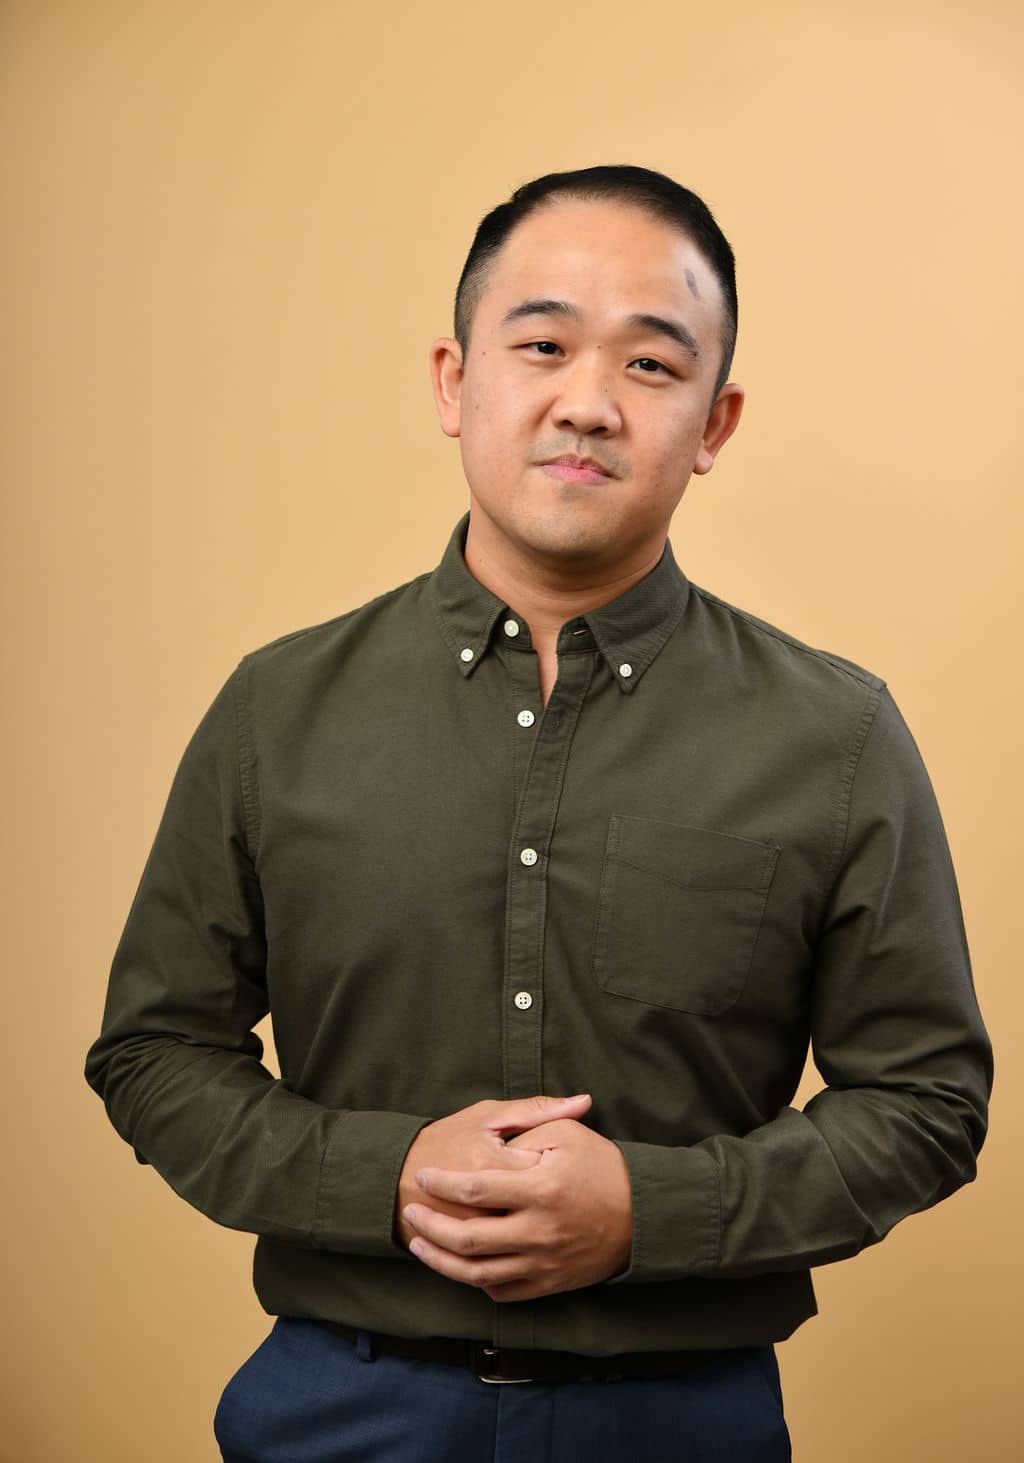 Portrait of Dr James Wong against a beige background